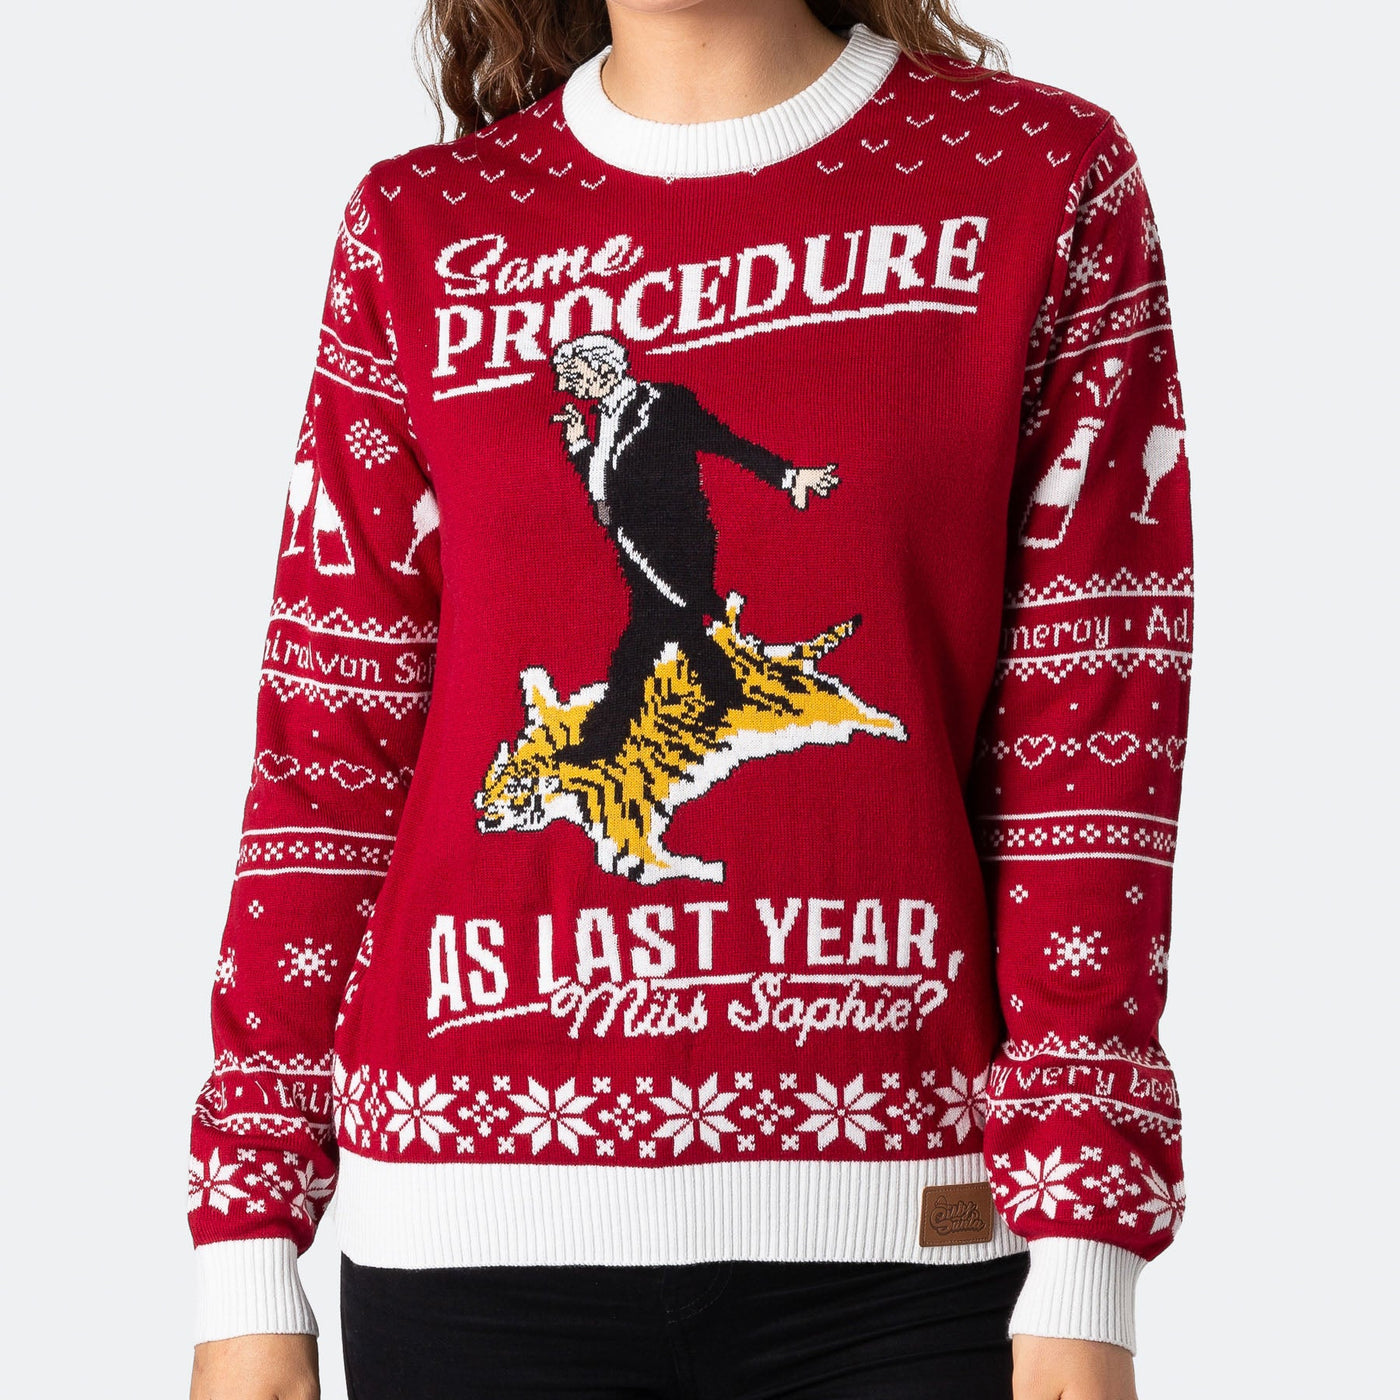 Women's Same Procedure As Last Year Christmas Sweater